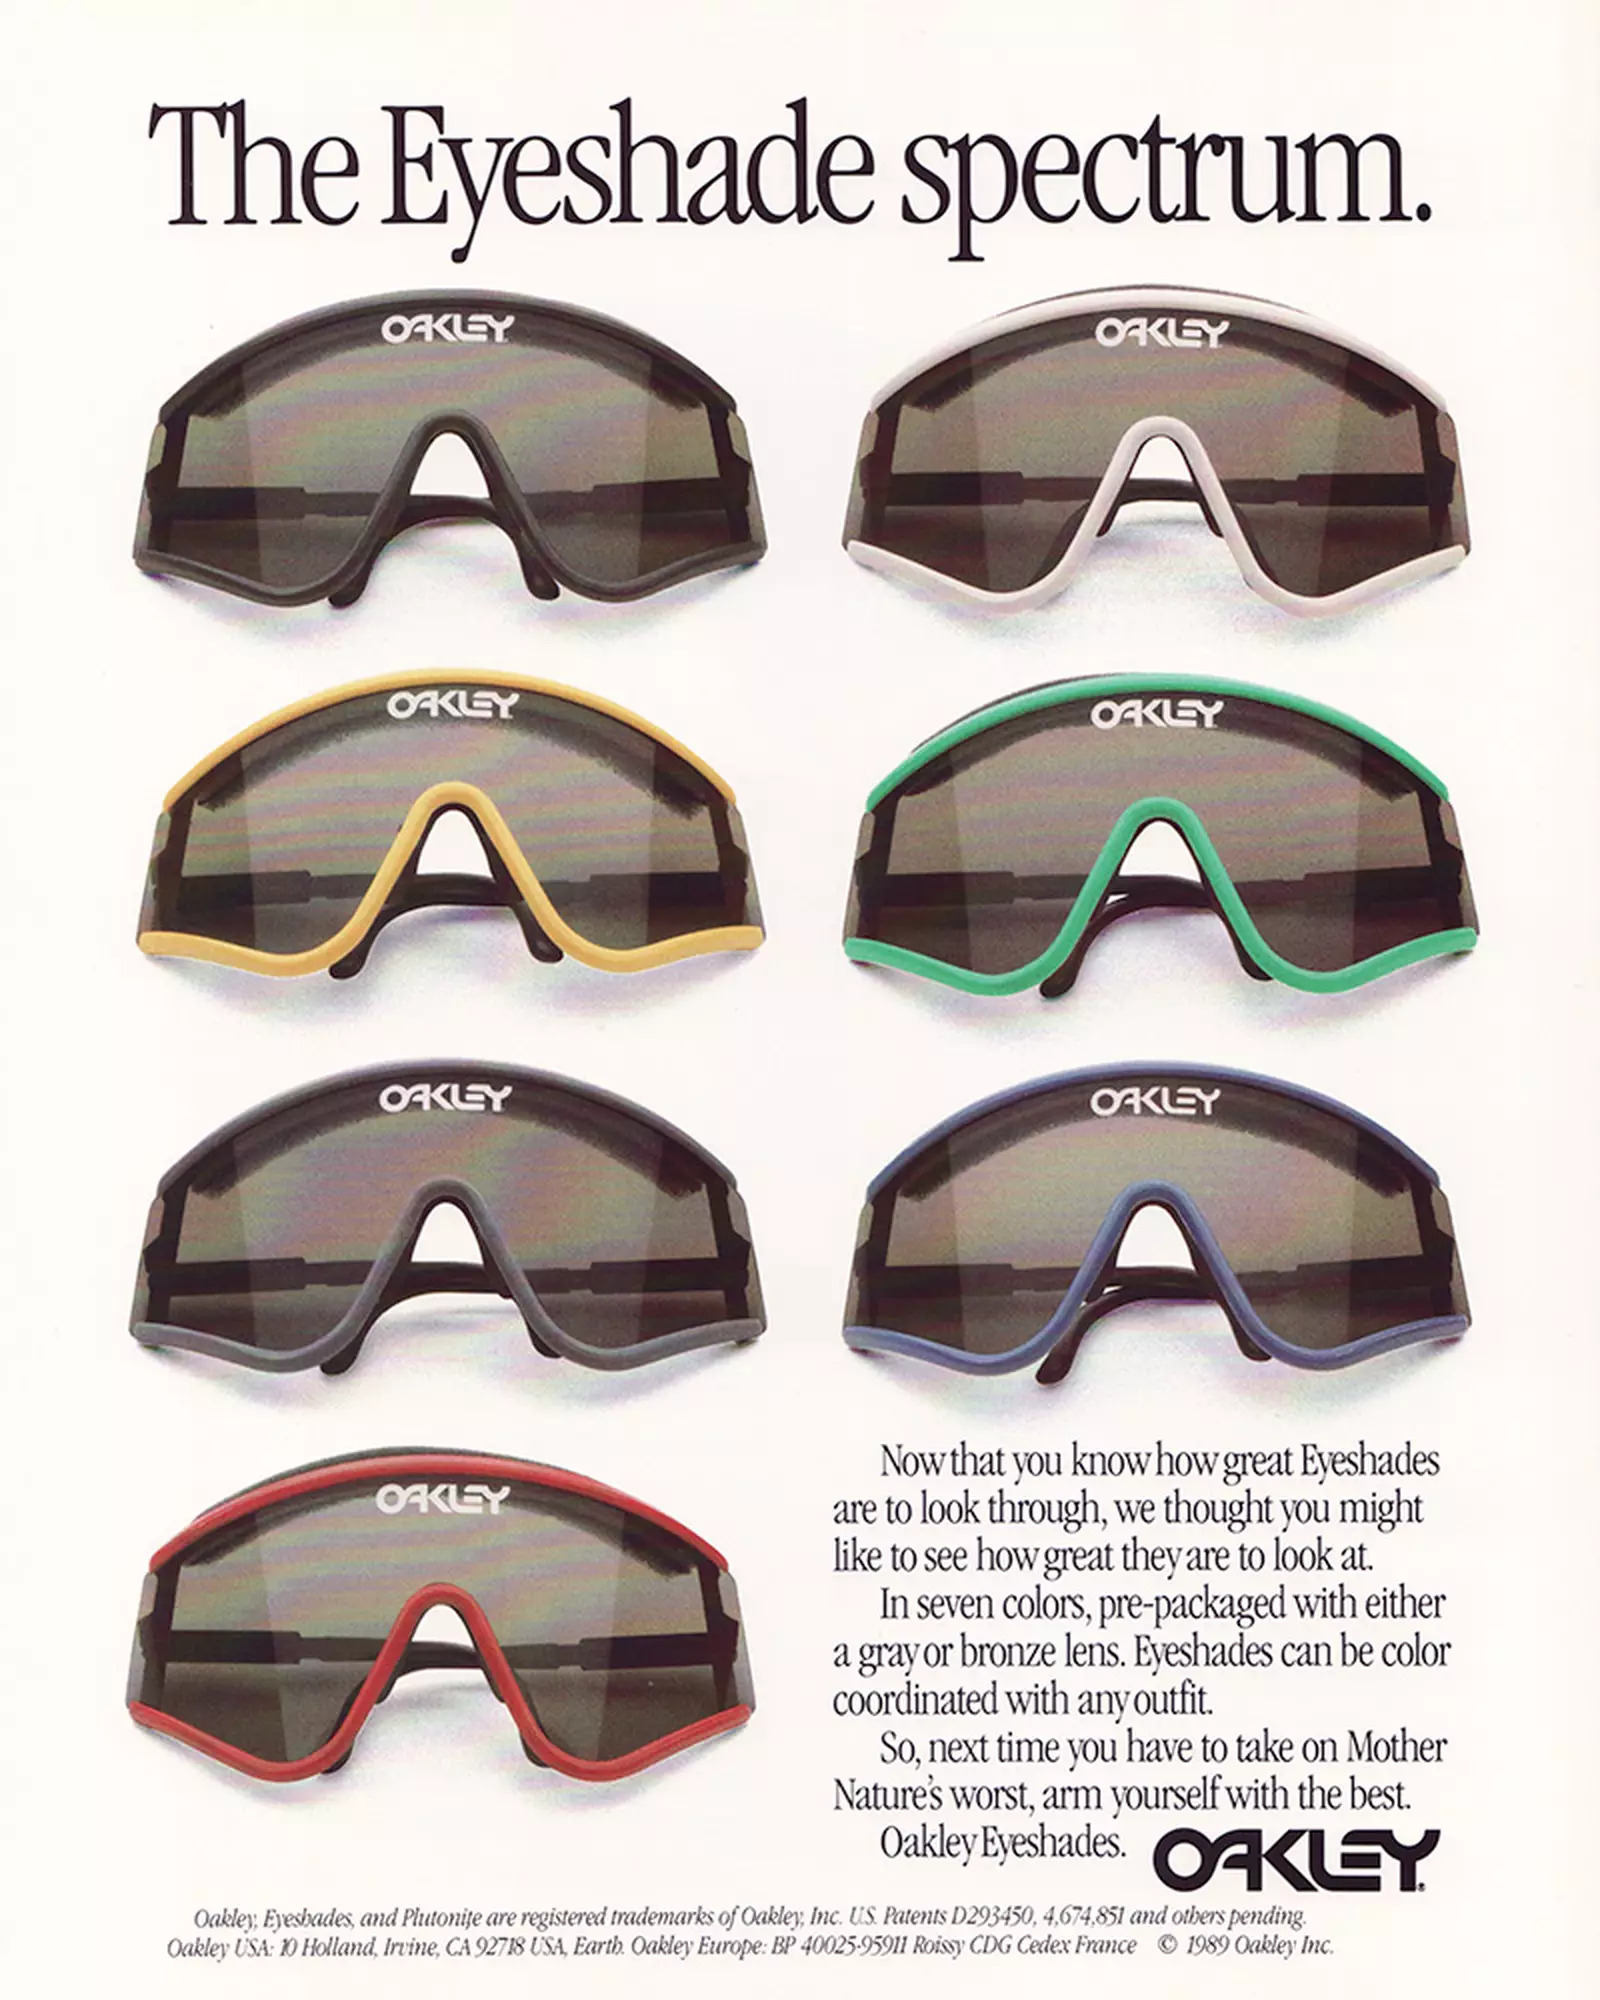 Oakley - The Eyeshade Spectrum